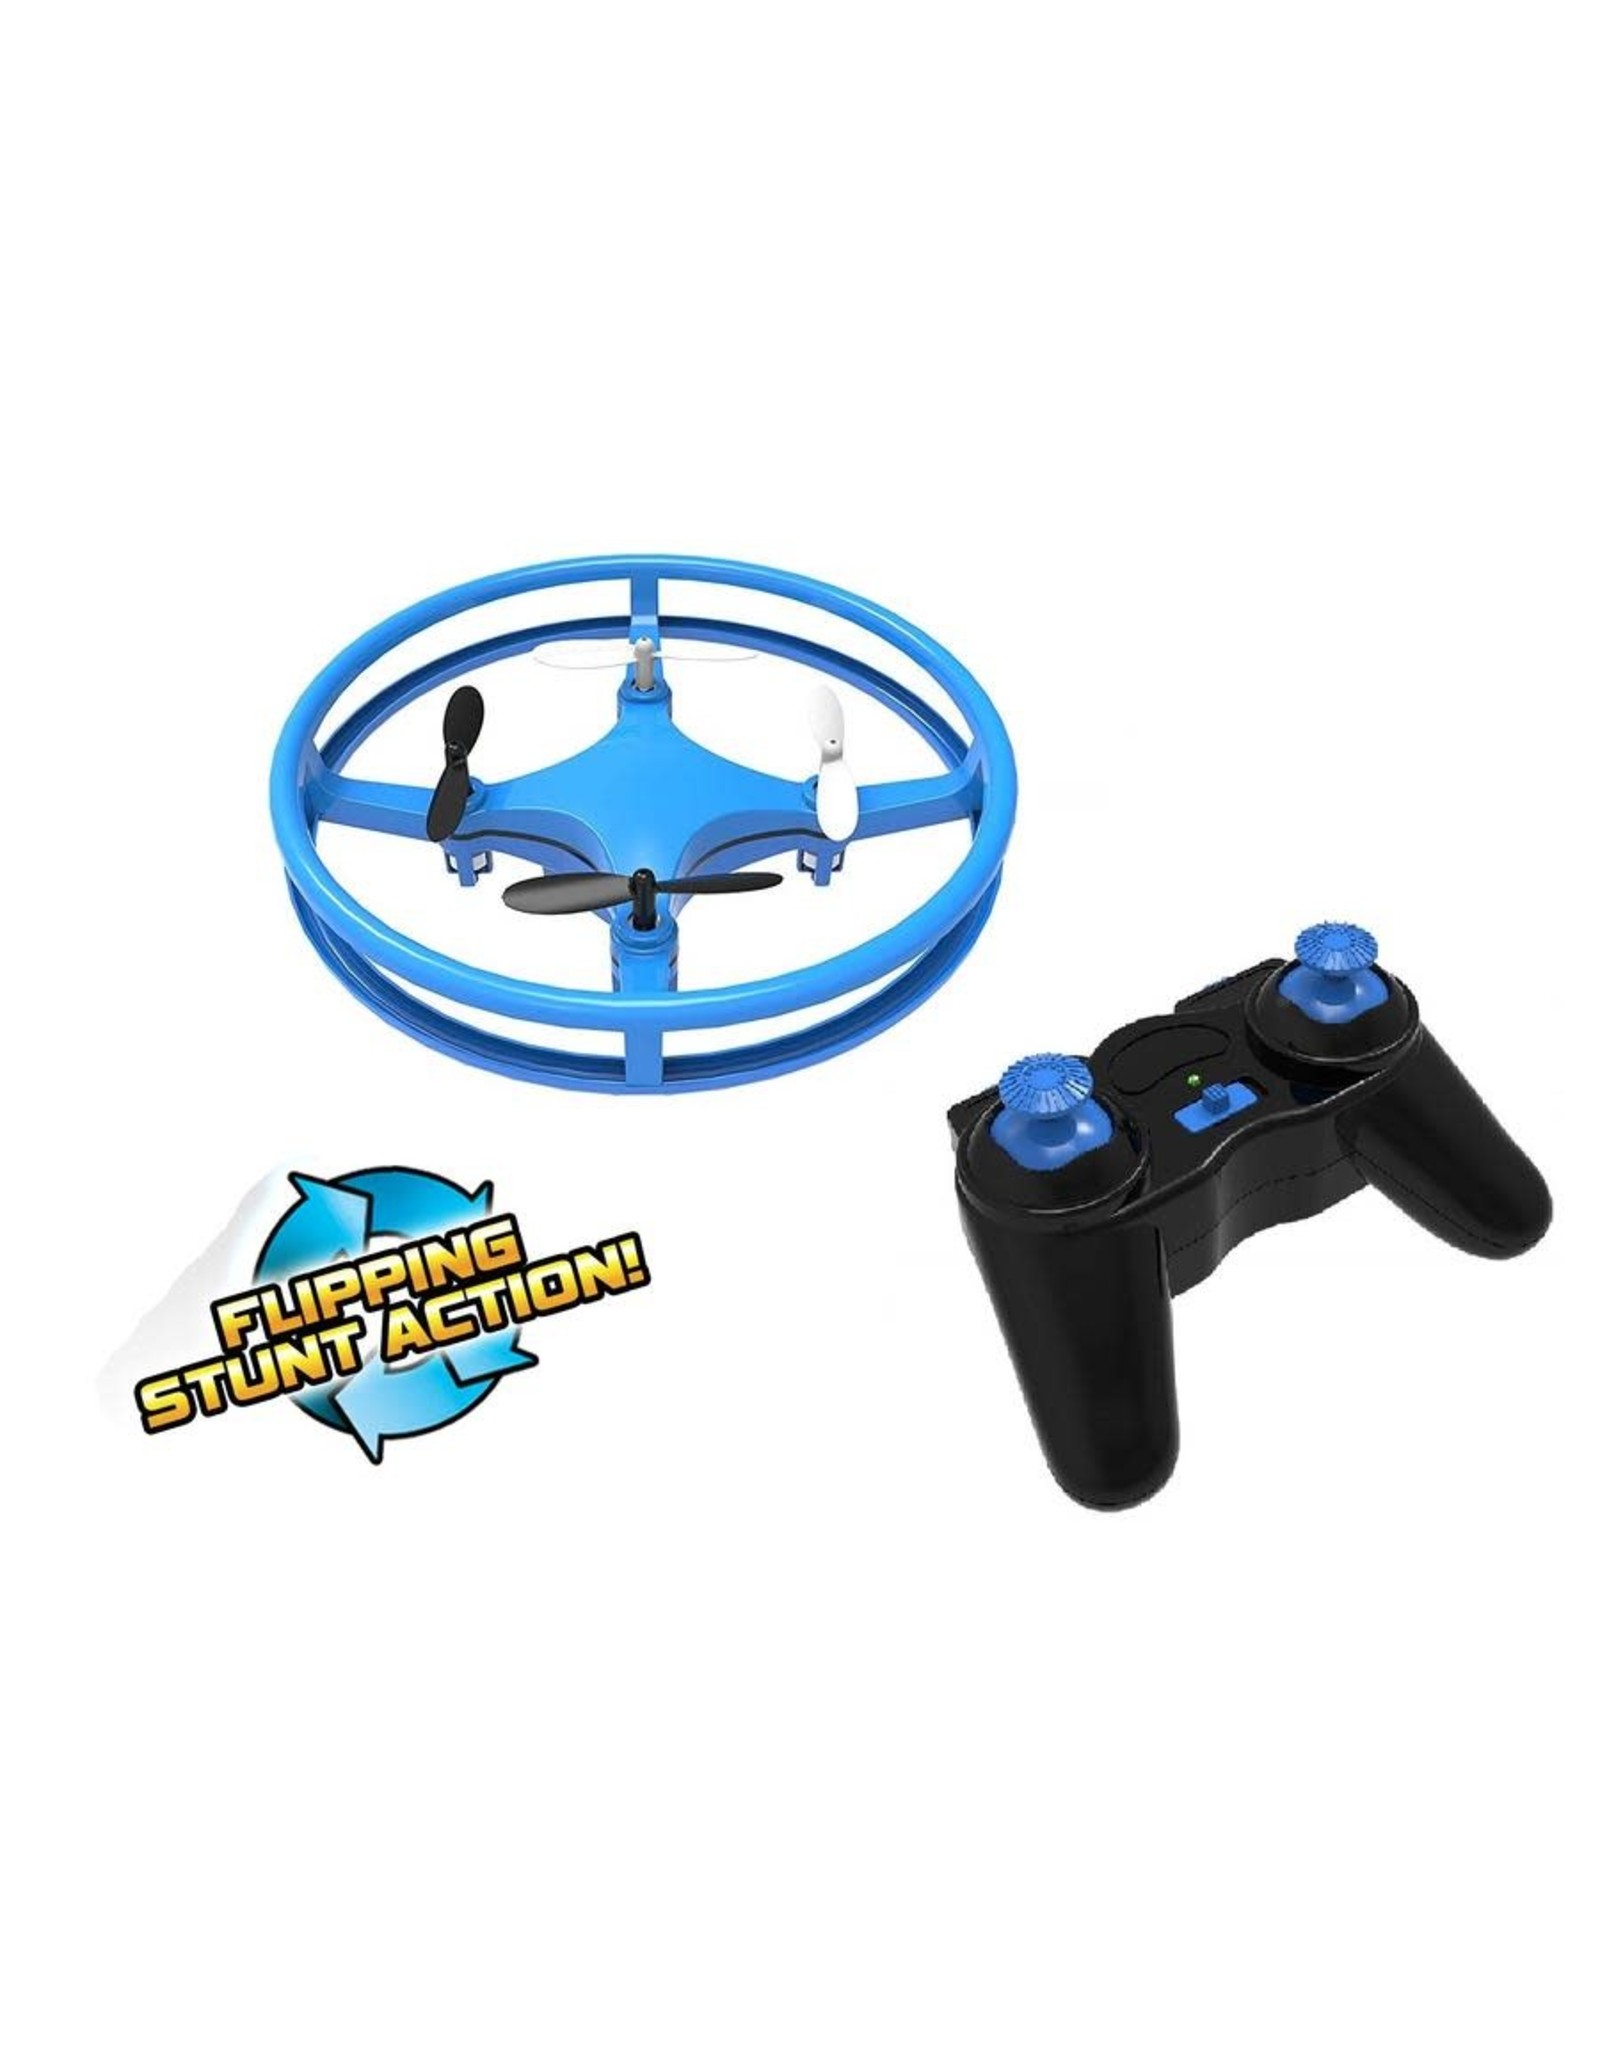 Disc Drone Blue